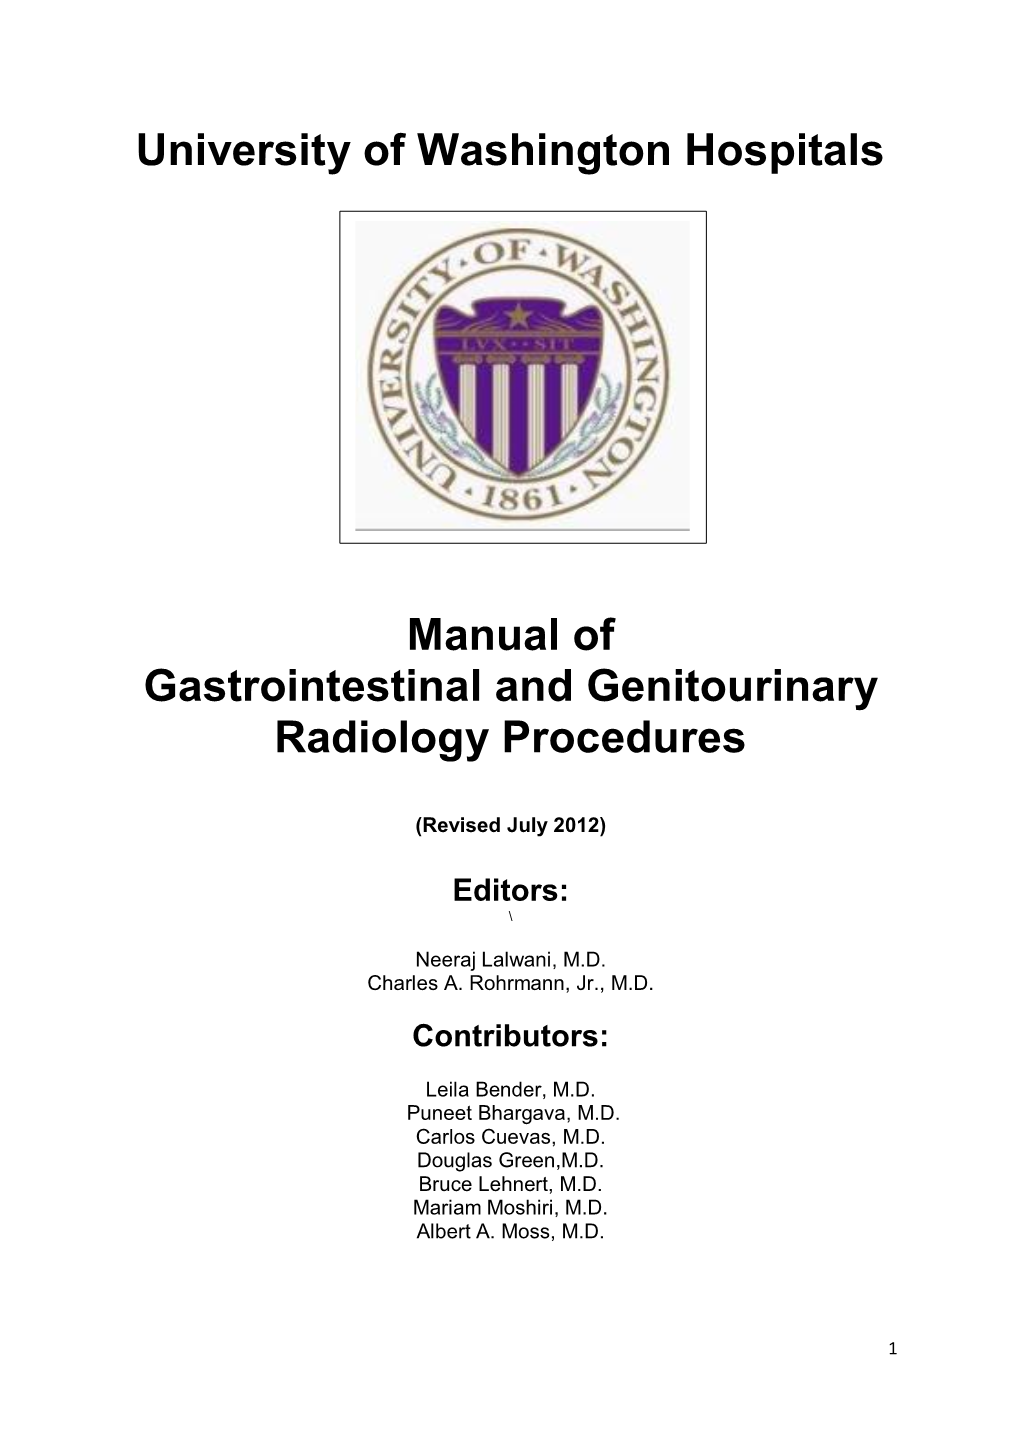 University of Washington Hospitals Manual of Gastrointestinal And